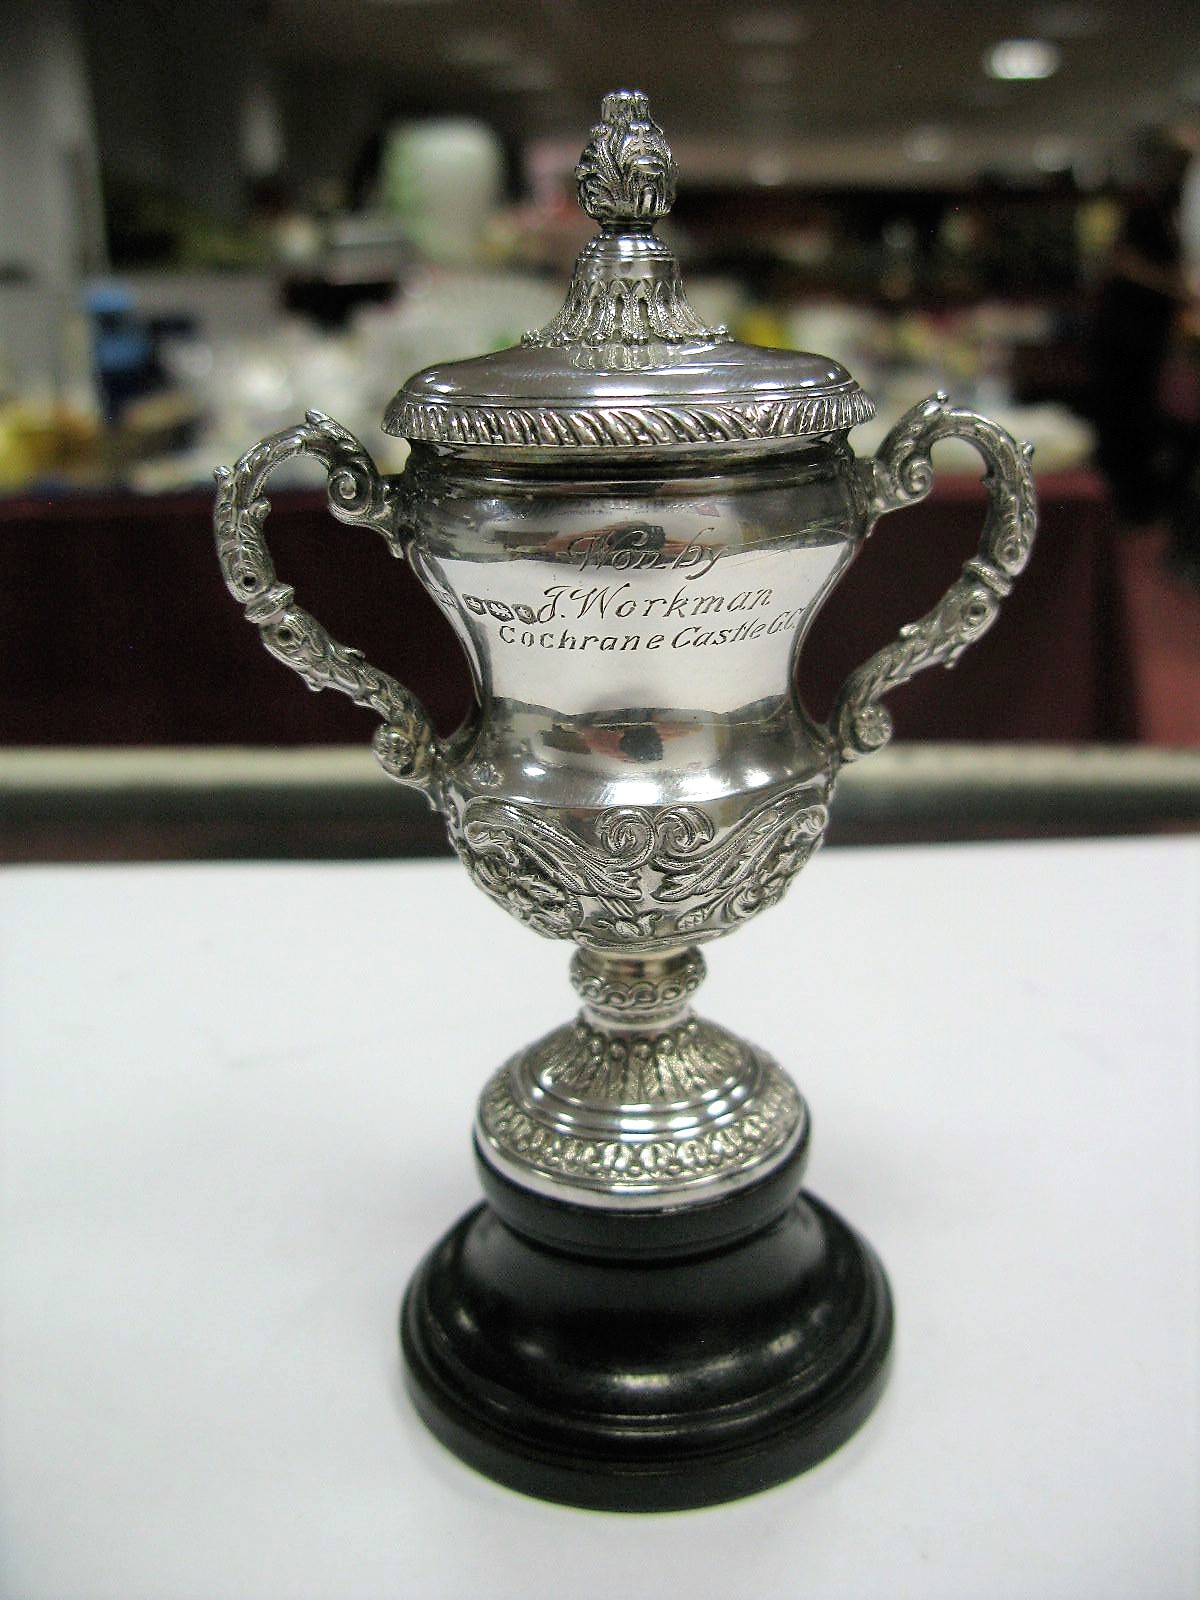 A Hallmarked Silver Miniature Trophy, Mappin & Webb, Sheffield 1936, engraved inscription "Replica